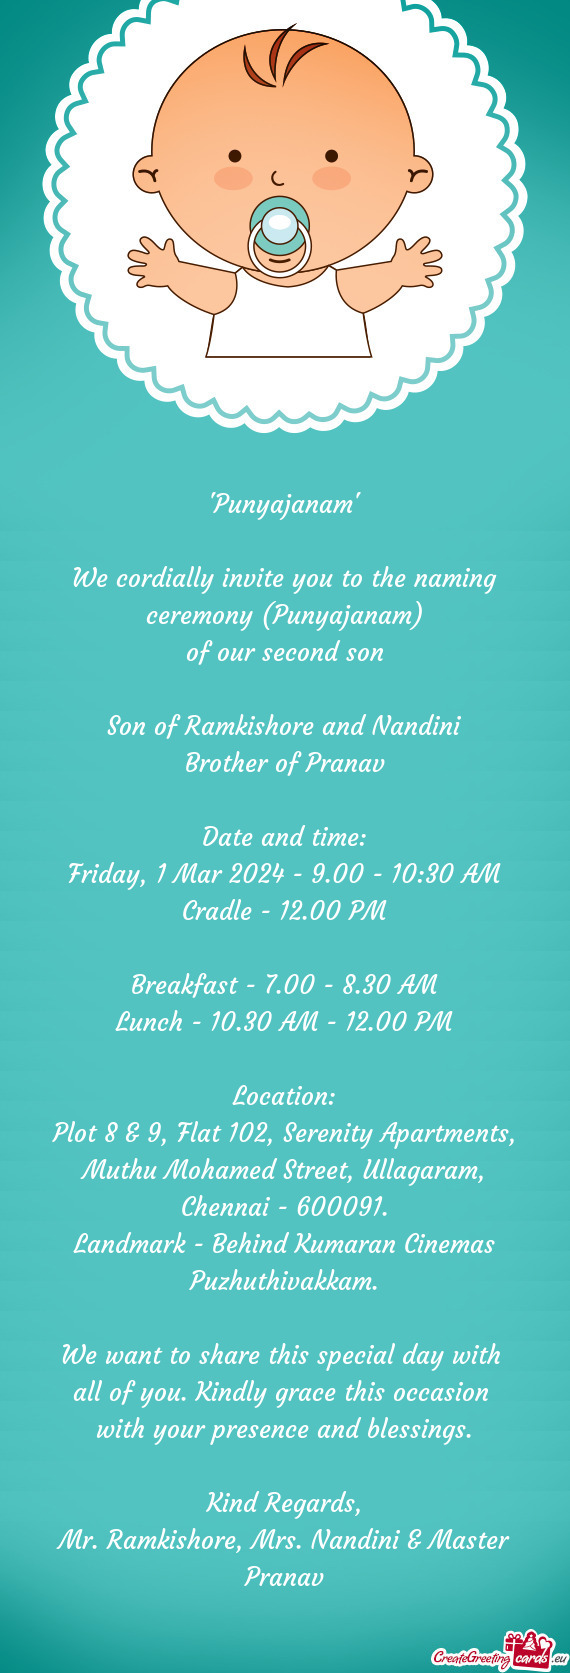 Son of Ramkishore and Nandini